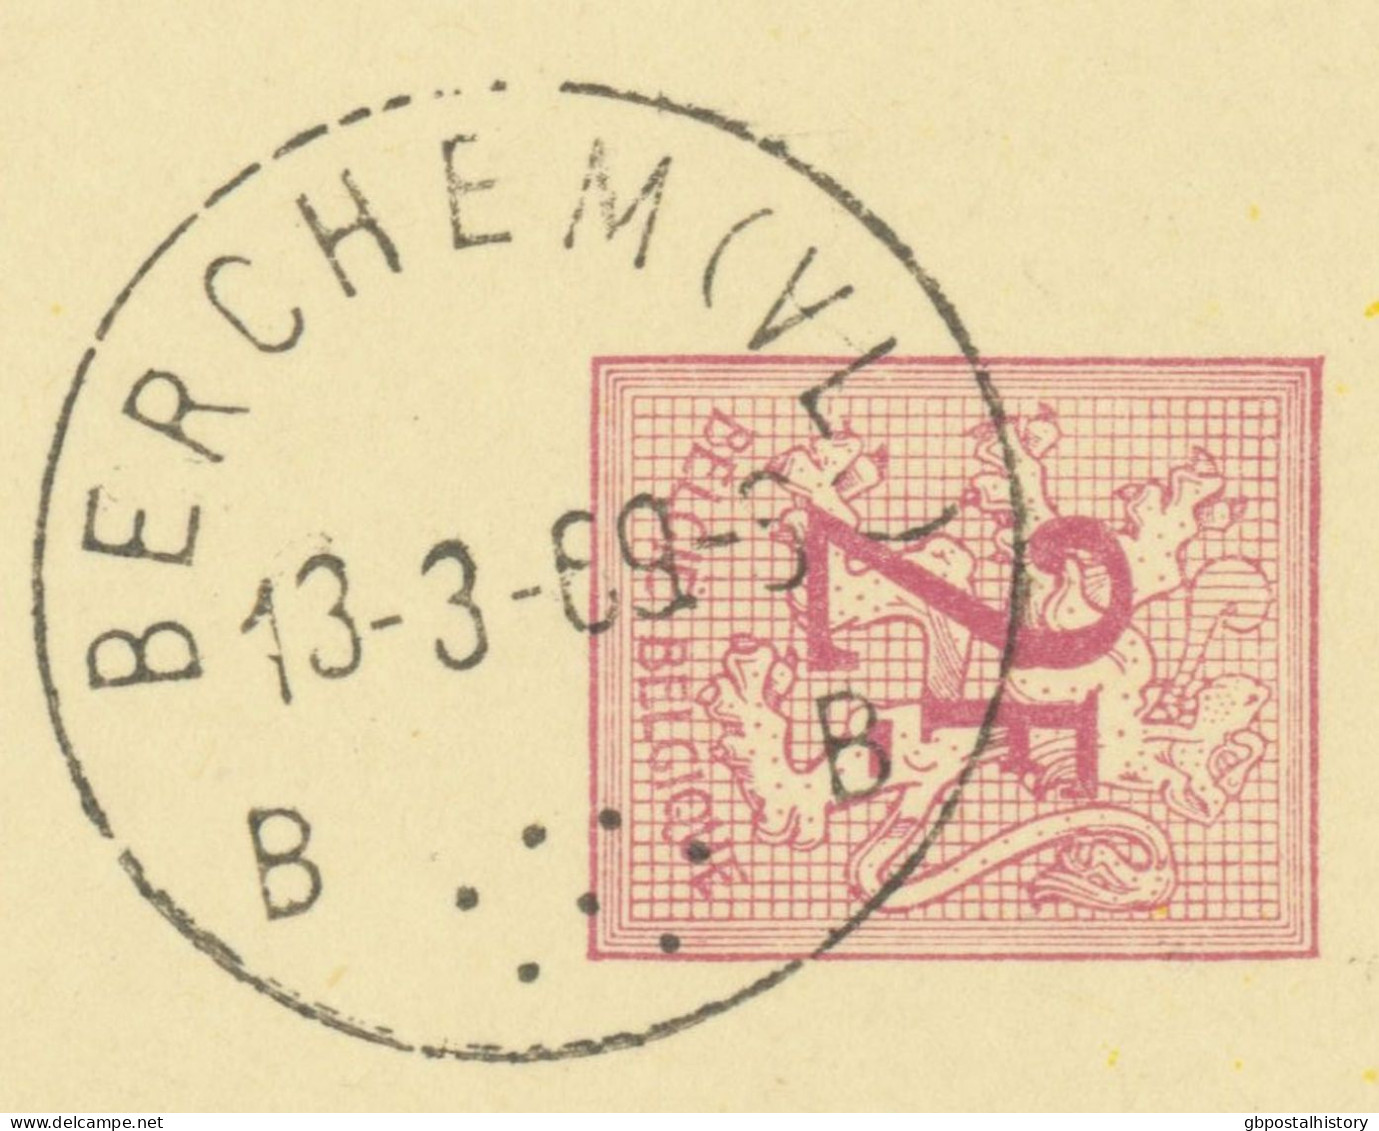 BELGIUM VILLAGE POSTMARKS  BERCHEM (VL.) B (now Kluisbergen) SC With Dots 1969 (Postal Stationery 2 F, PUBLIBEL 2114) - Puntstempels